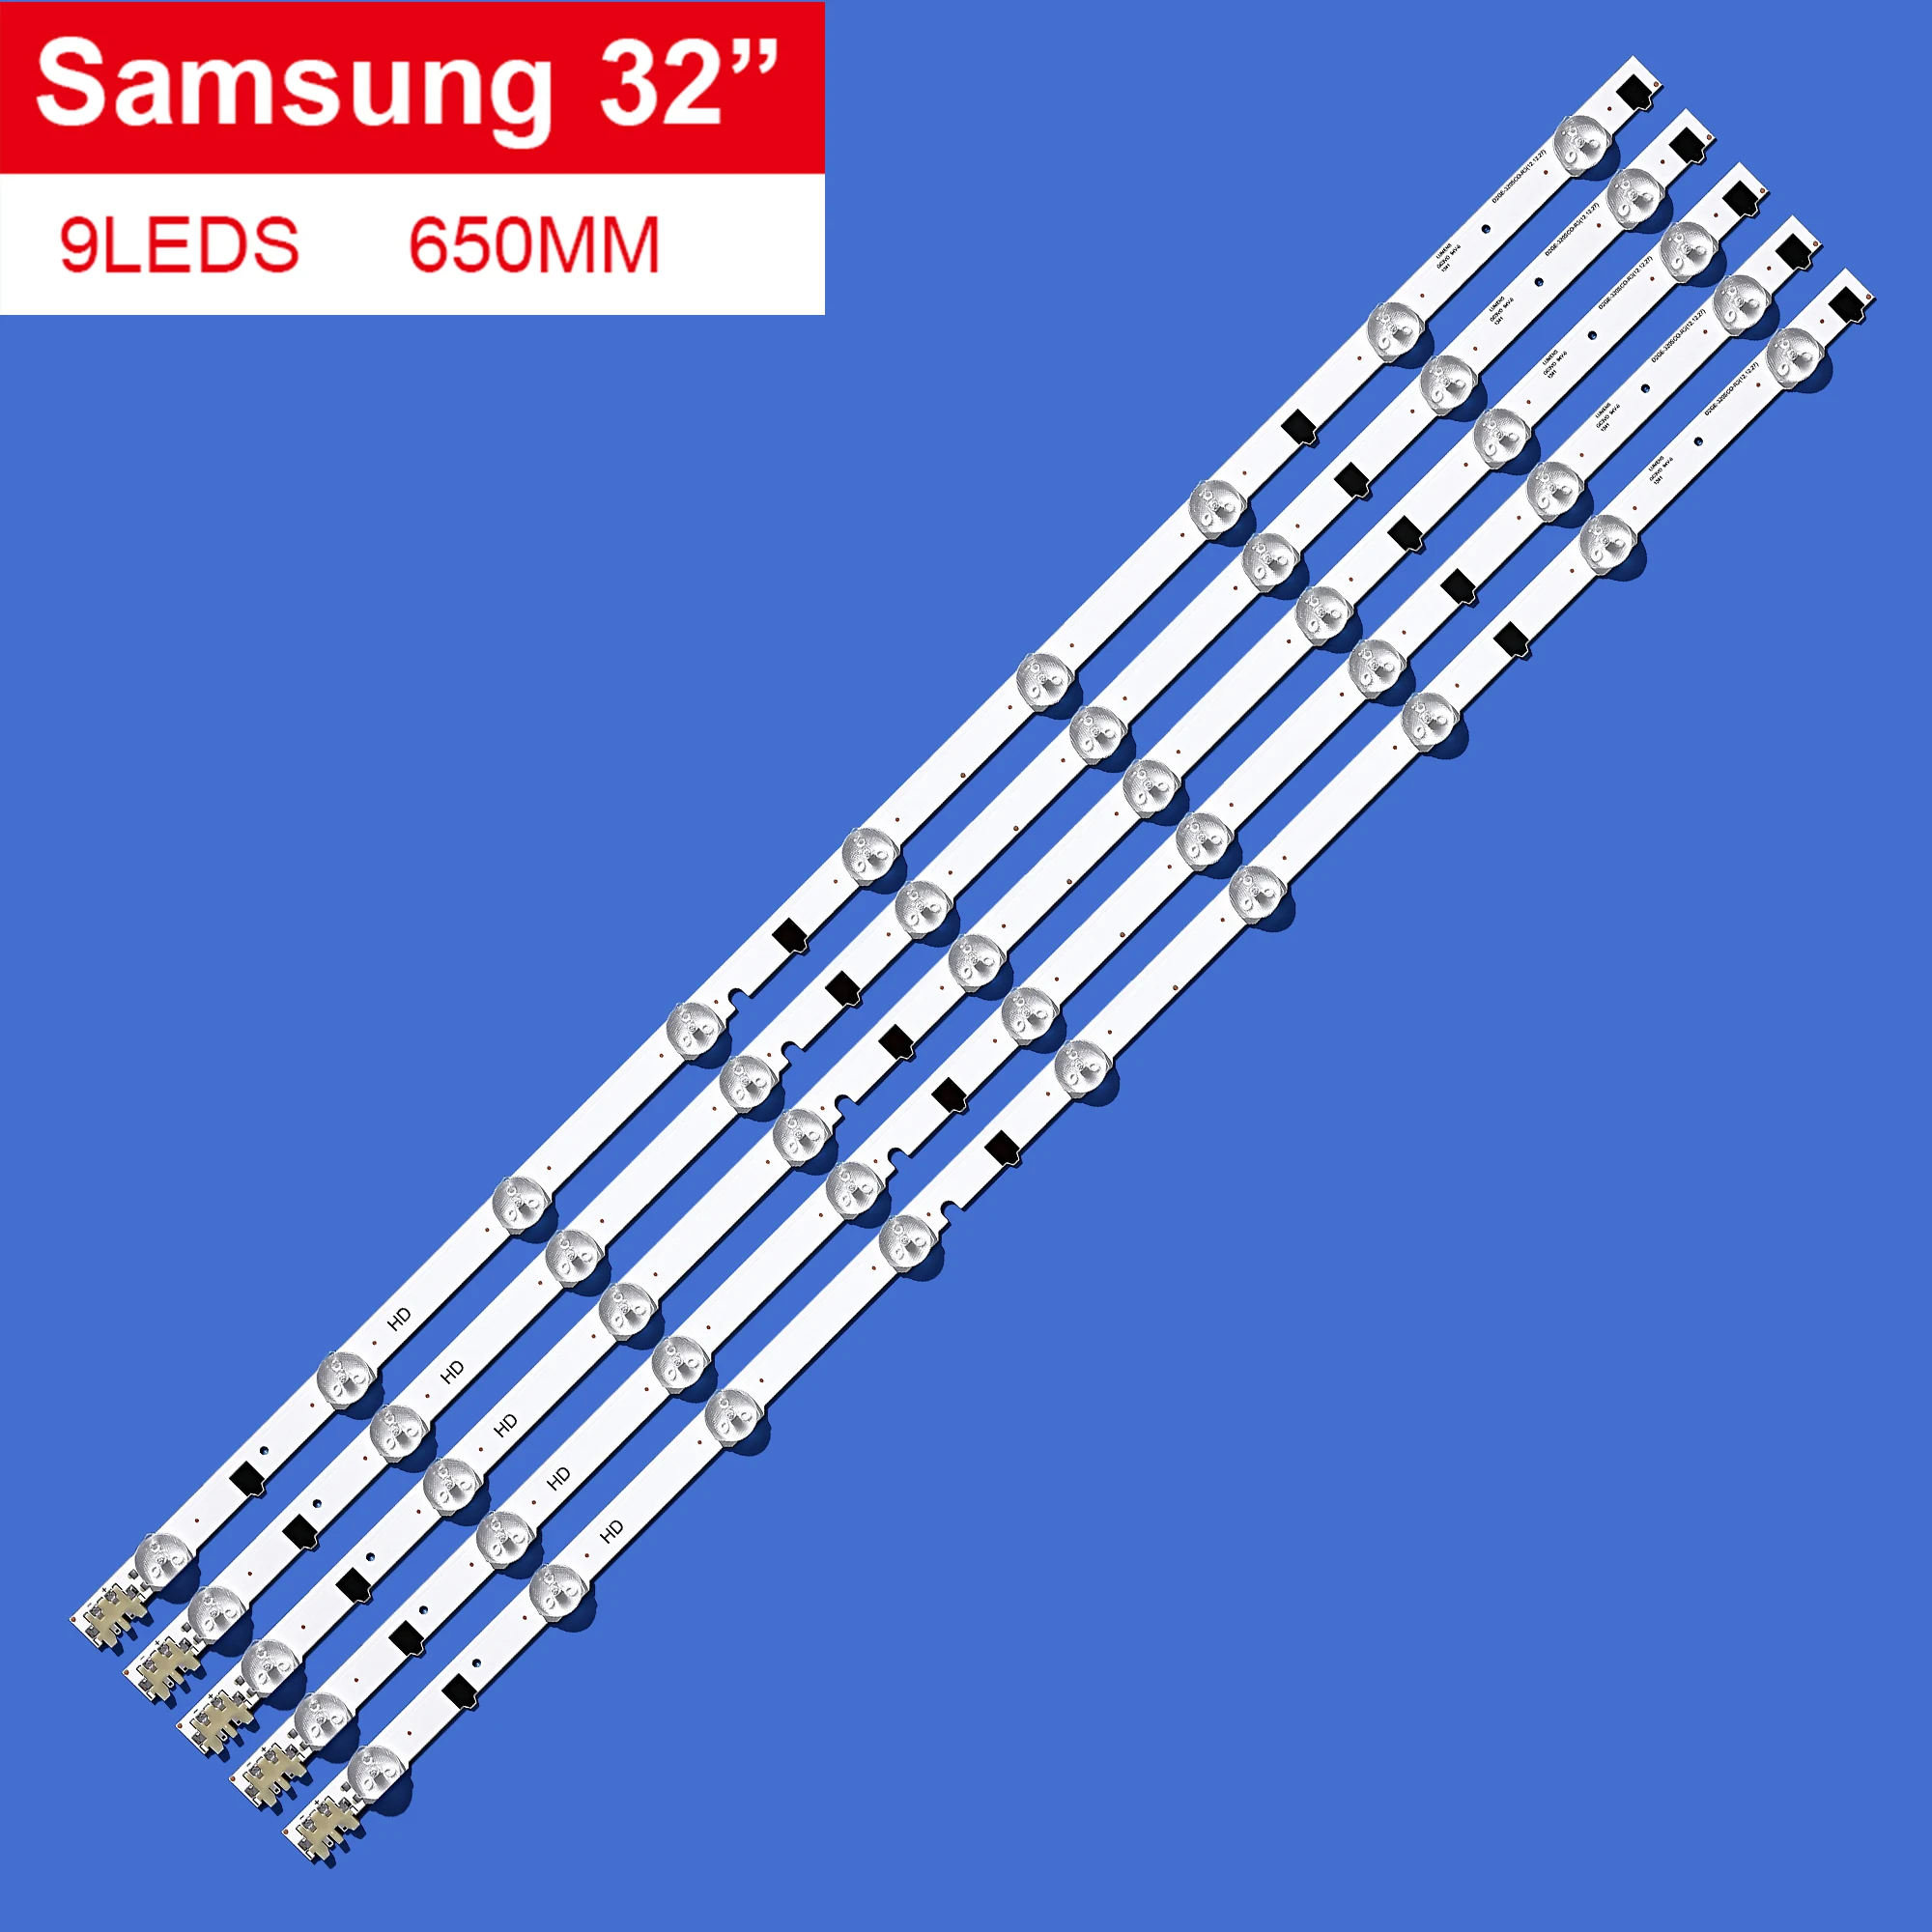 655MM LED Strip D2GE-320SC1-R0 BN96-28489A For Samsung Sharp 32''TV D2GE-320C1-R0 UE32F5000 UE32F5500 UE32F4000 CY-HF320BGSV1H